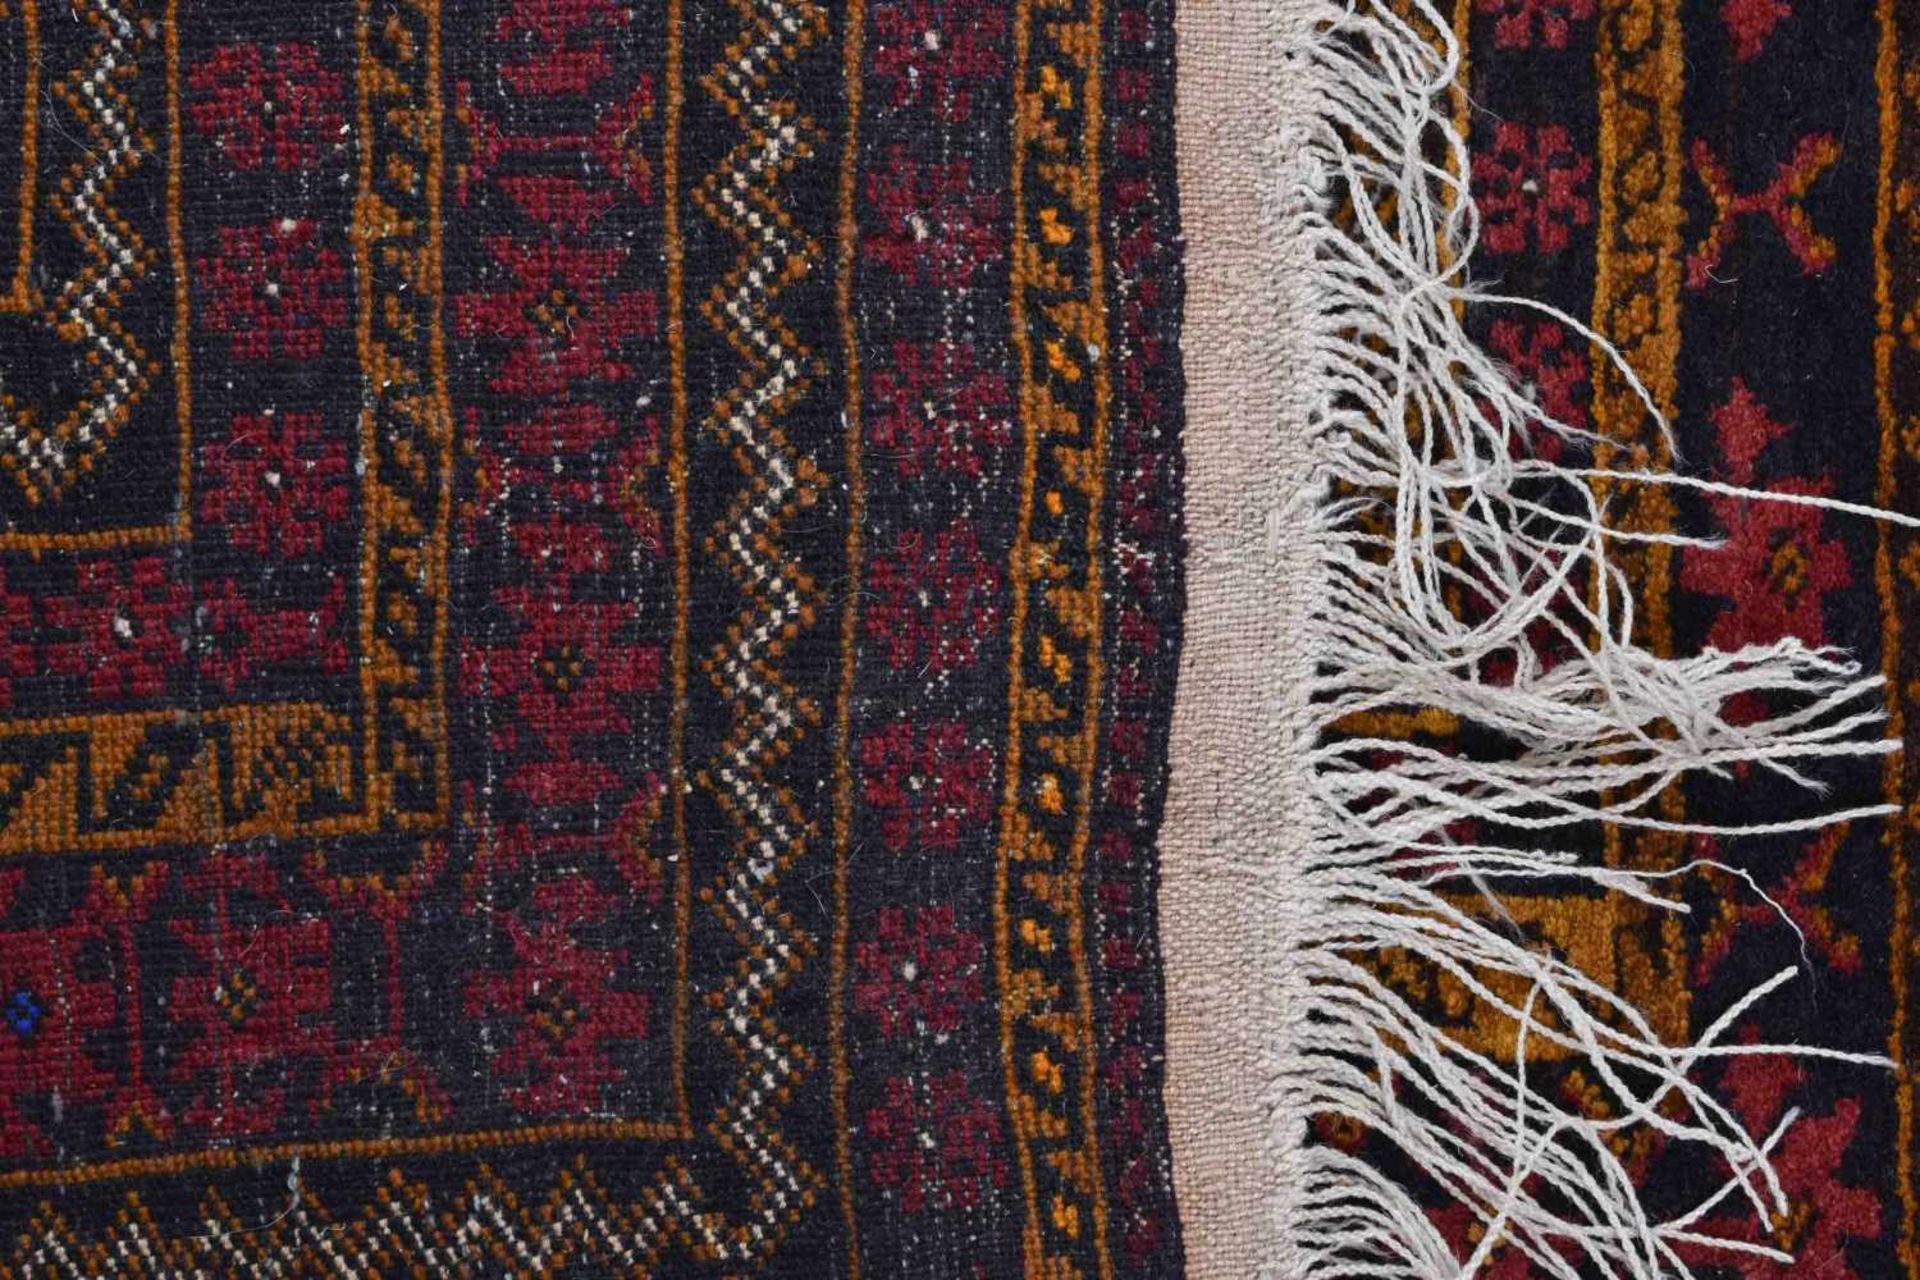 alter Orient Teppichhandgeknüpft, 190 cm x 117 cmold orient carpethand knotted, 190 cm x 117 cm - Image 3 of 3